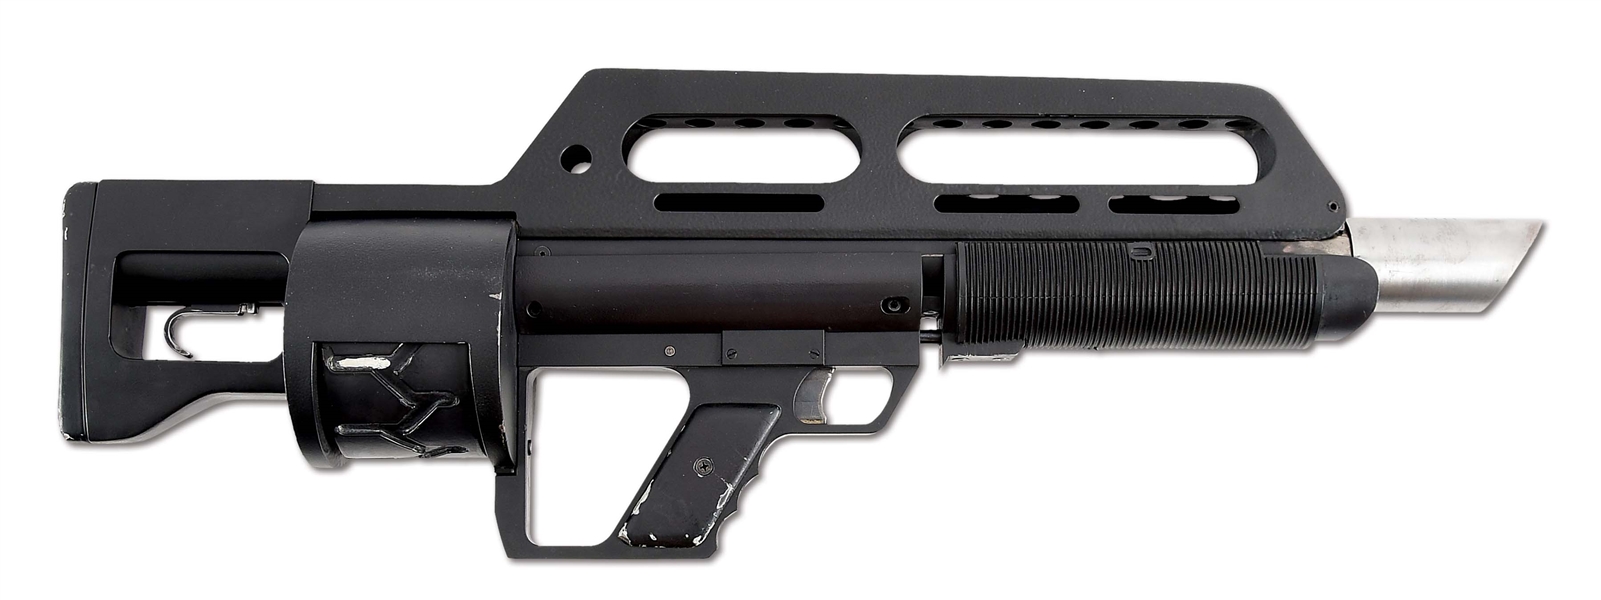 (N) THE ONLY REMAINING PANCOR MK3 “JACKHAMMER” SELECT FIRE REVOLVING SHOTGUN MACHINE GUN IN EXISTENCE (FULLY TRANSFERABLE).